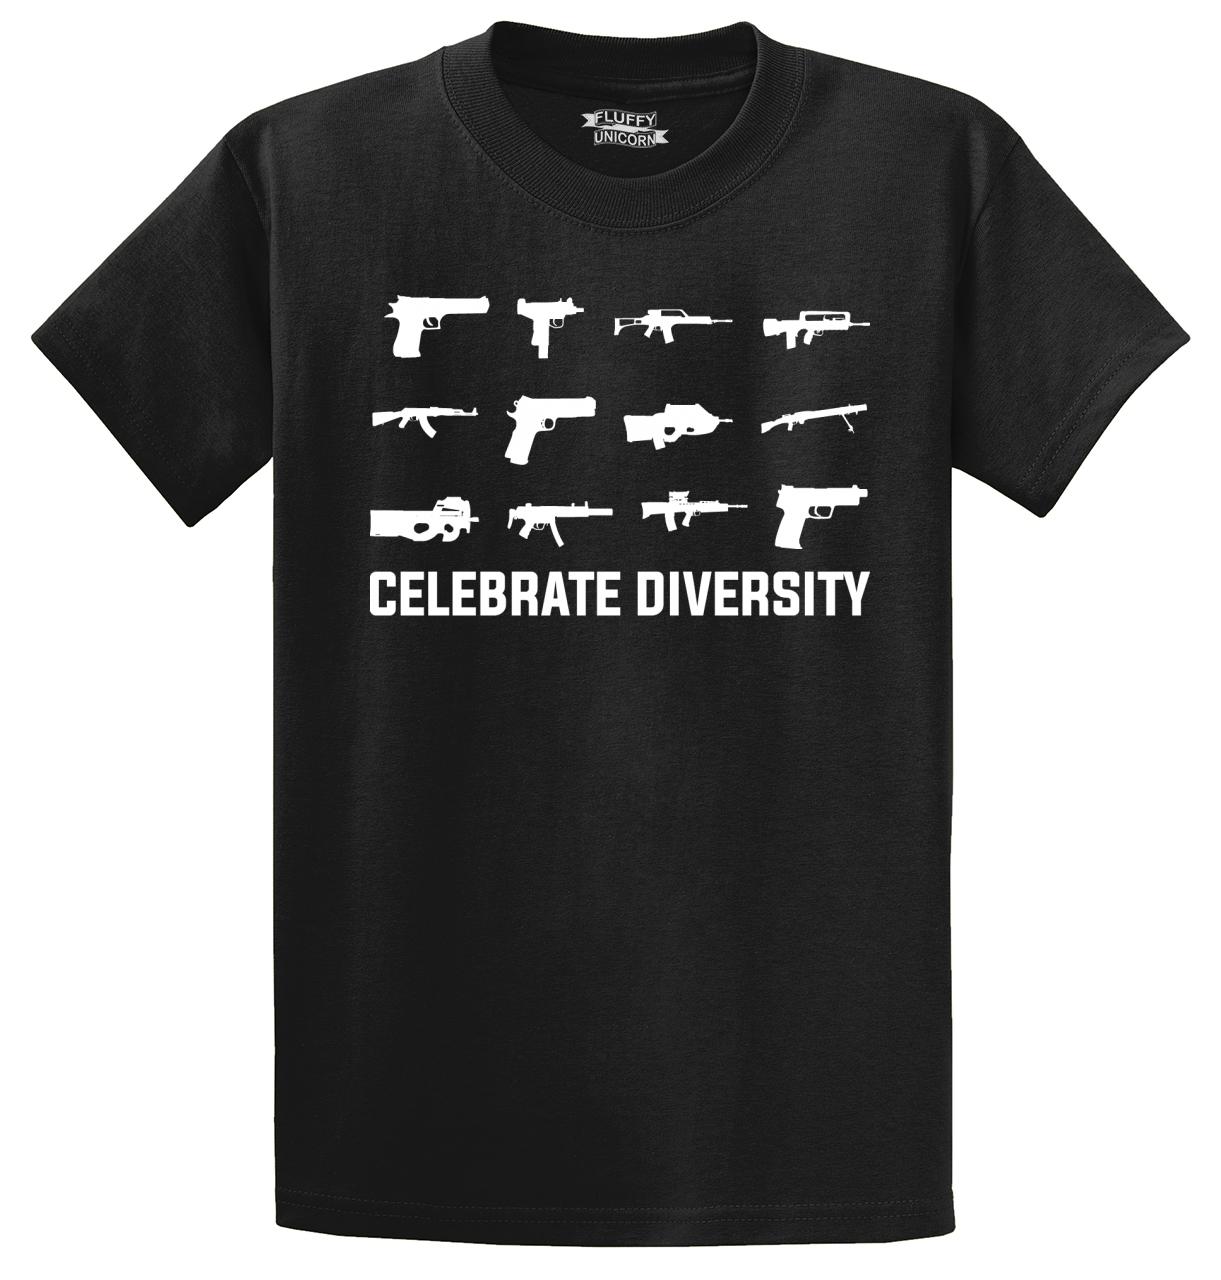 Details about   New Celebrate Diversity Shirt 2nd Amendment Guns Rights Funny T Shirt S-3XL 